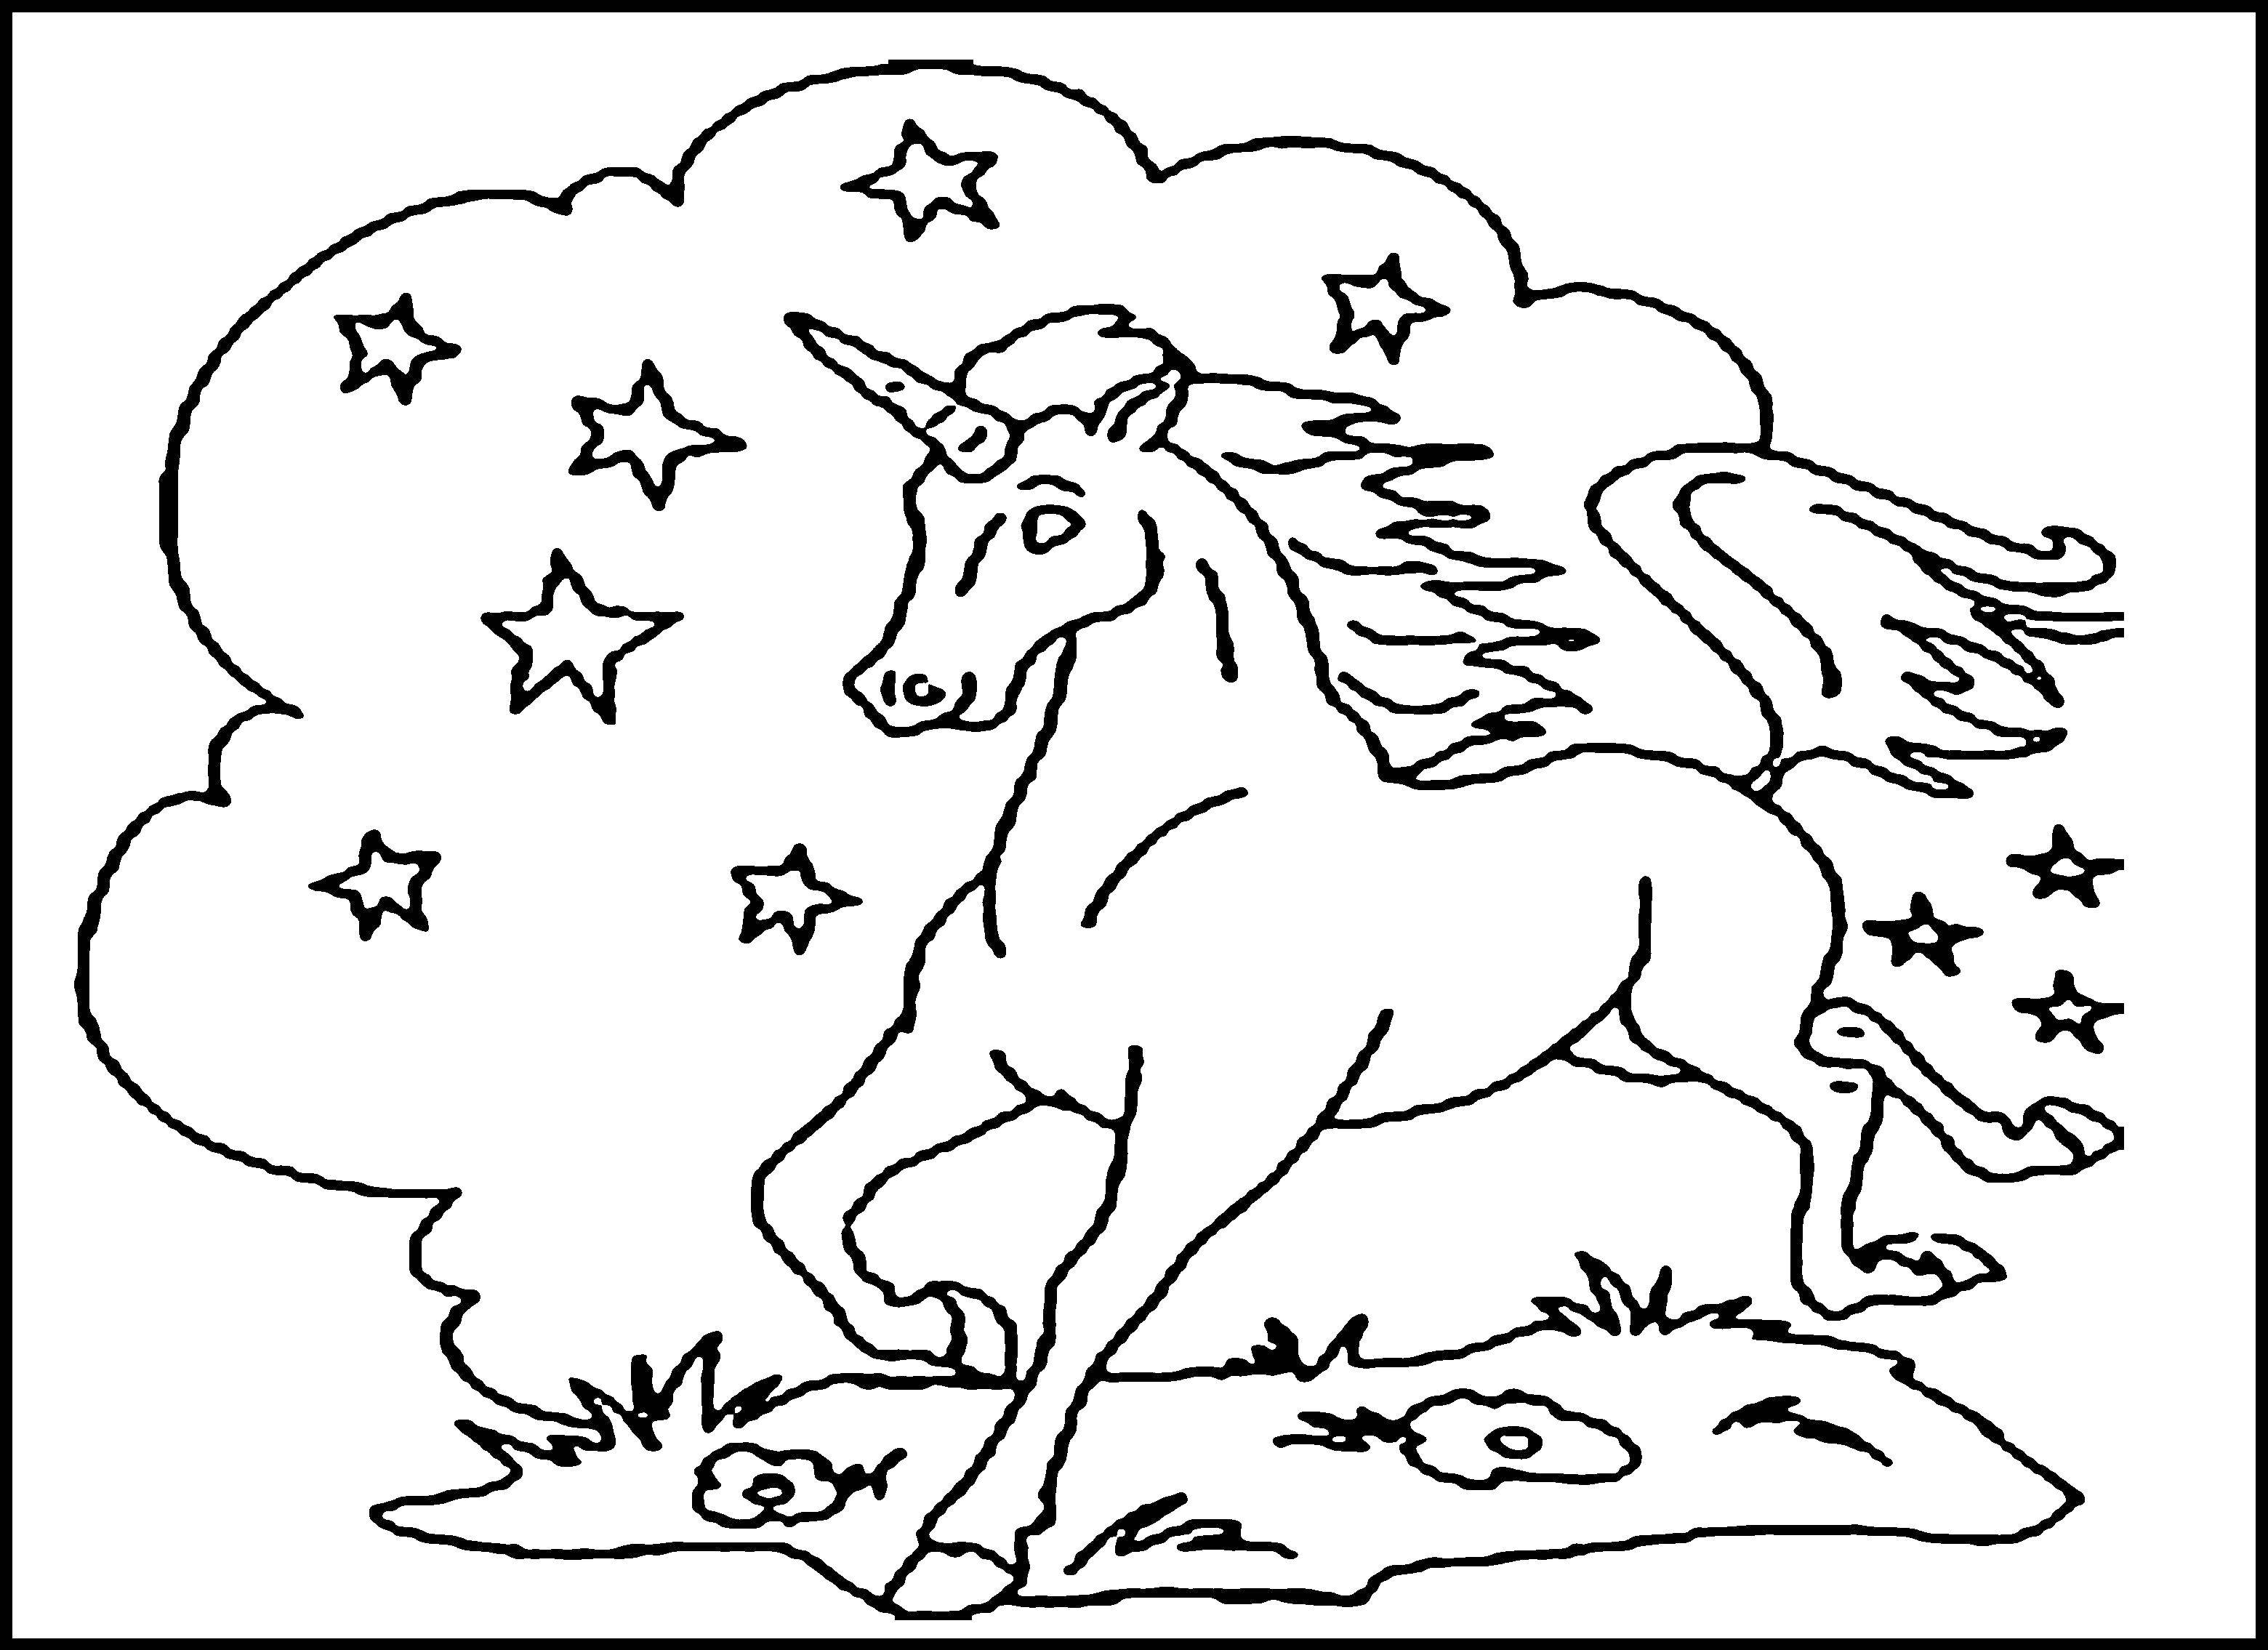 Coloring The unicorn among the stars. Category horse. Tags:  horses, unicorns.